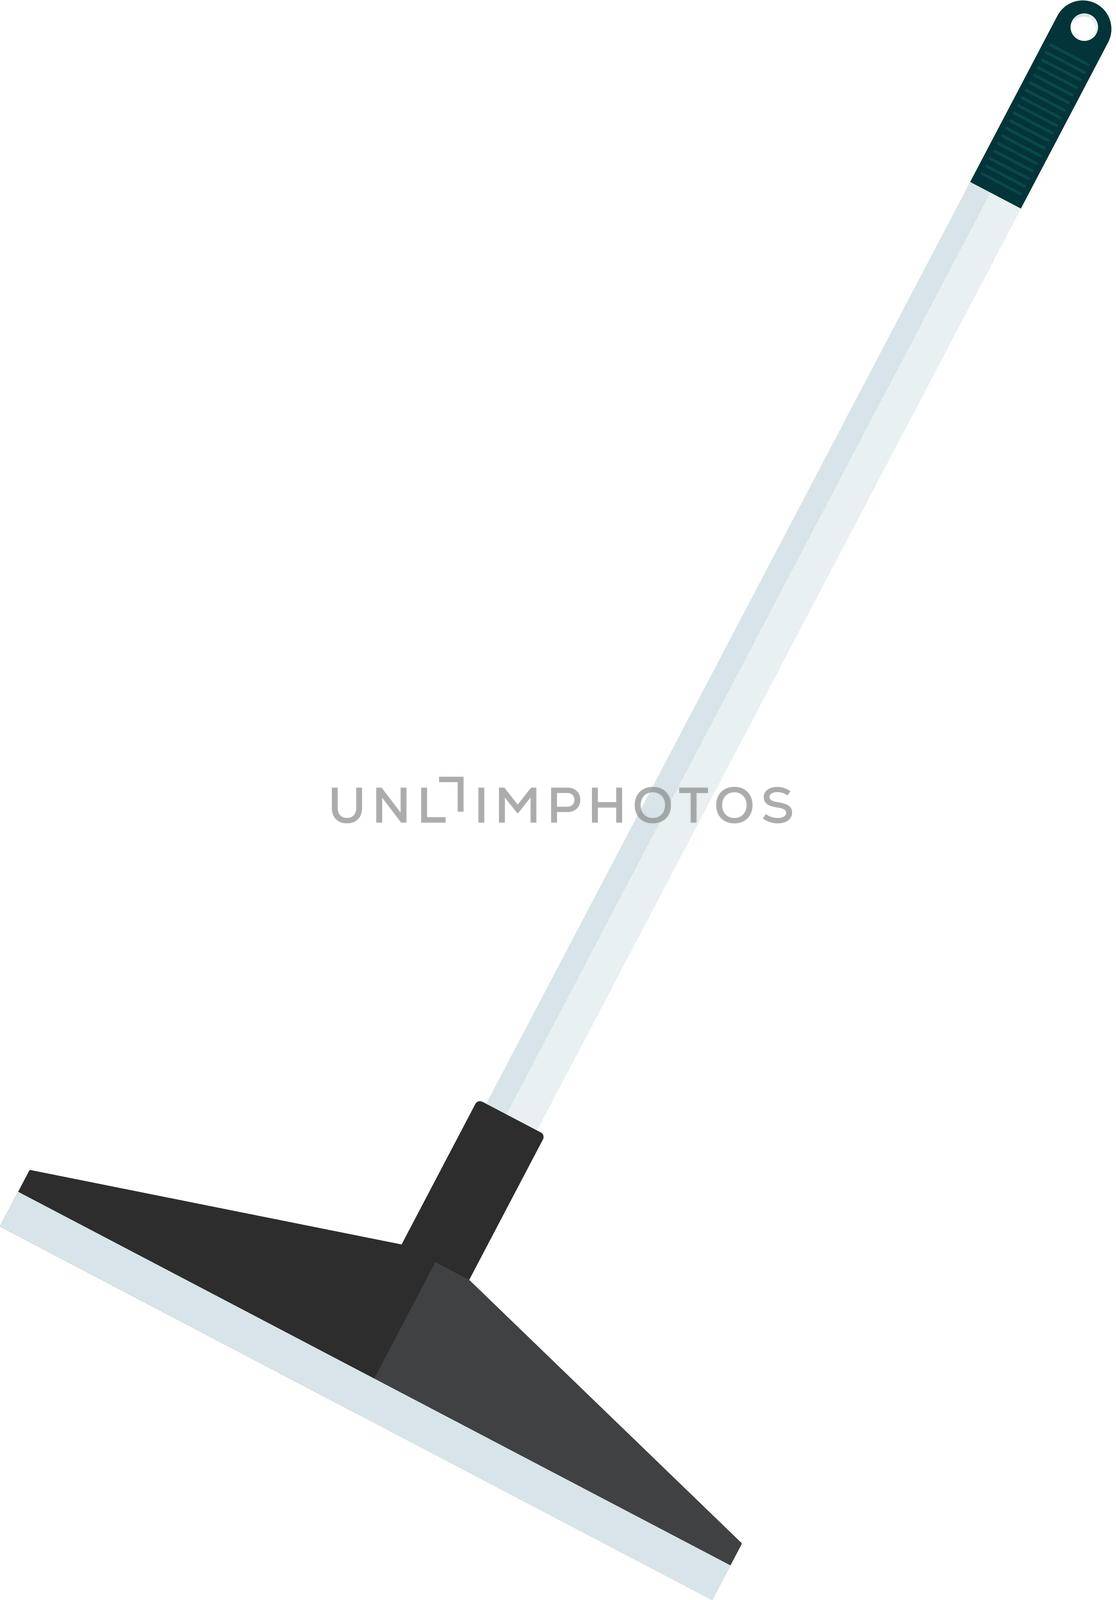 Glass wiper, illustration, vector on white background.